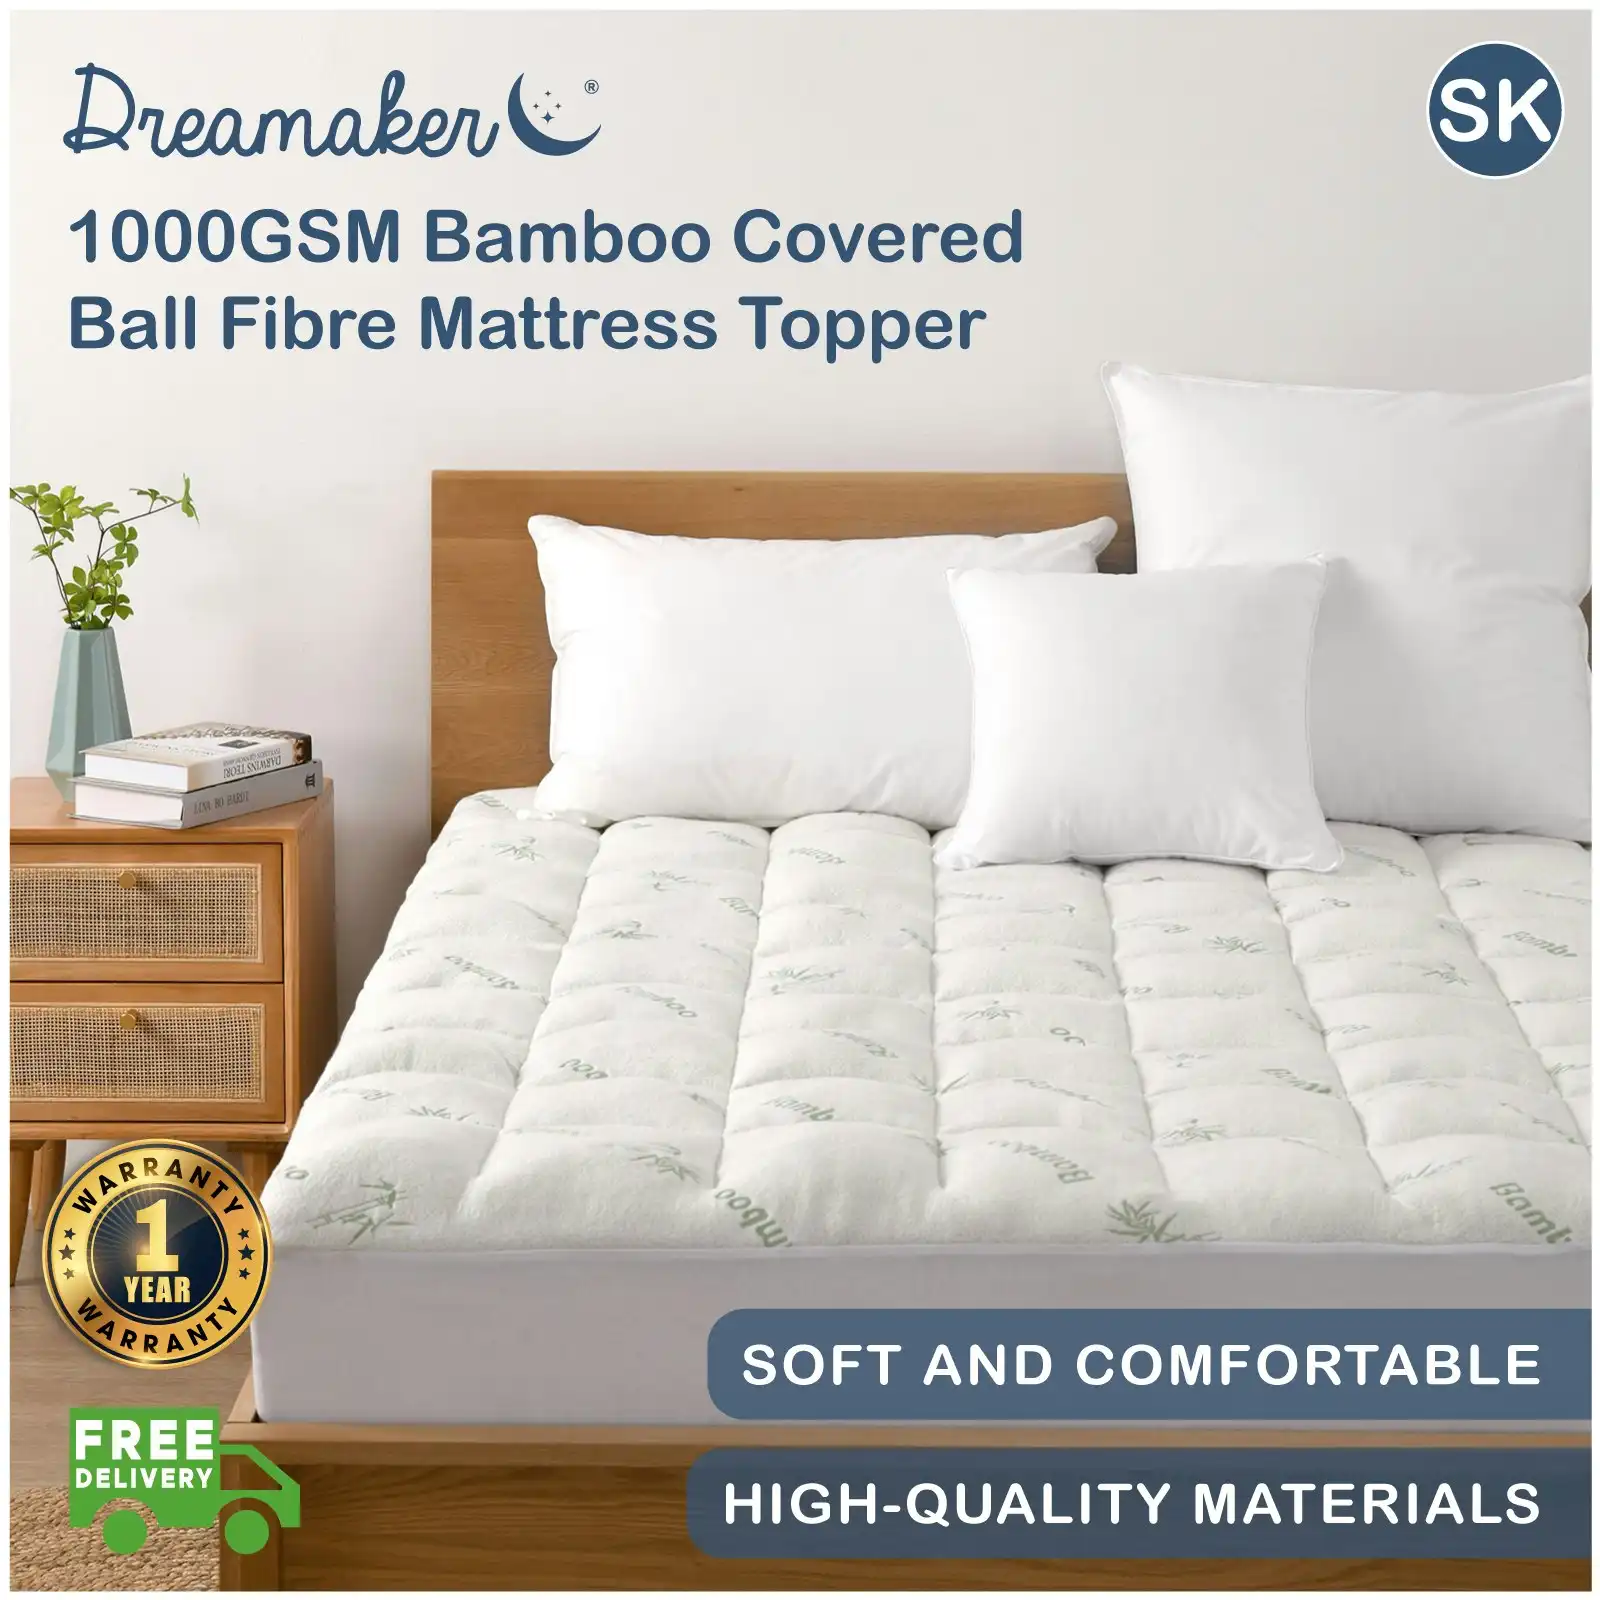 Dreamaker 1000GSM Bamboo Covered Ball Fibre Mattress Topper Super King Bed